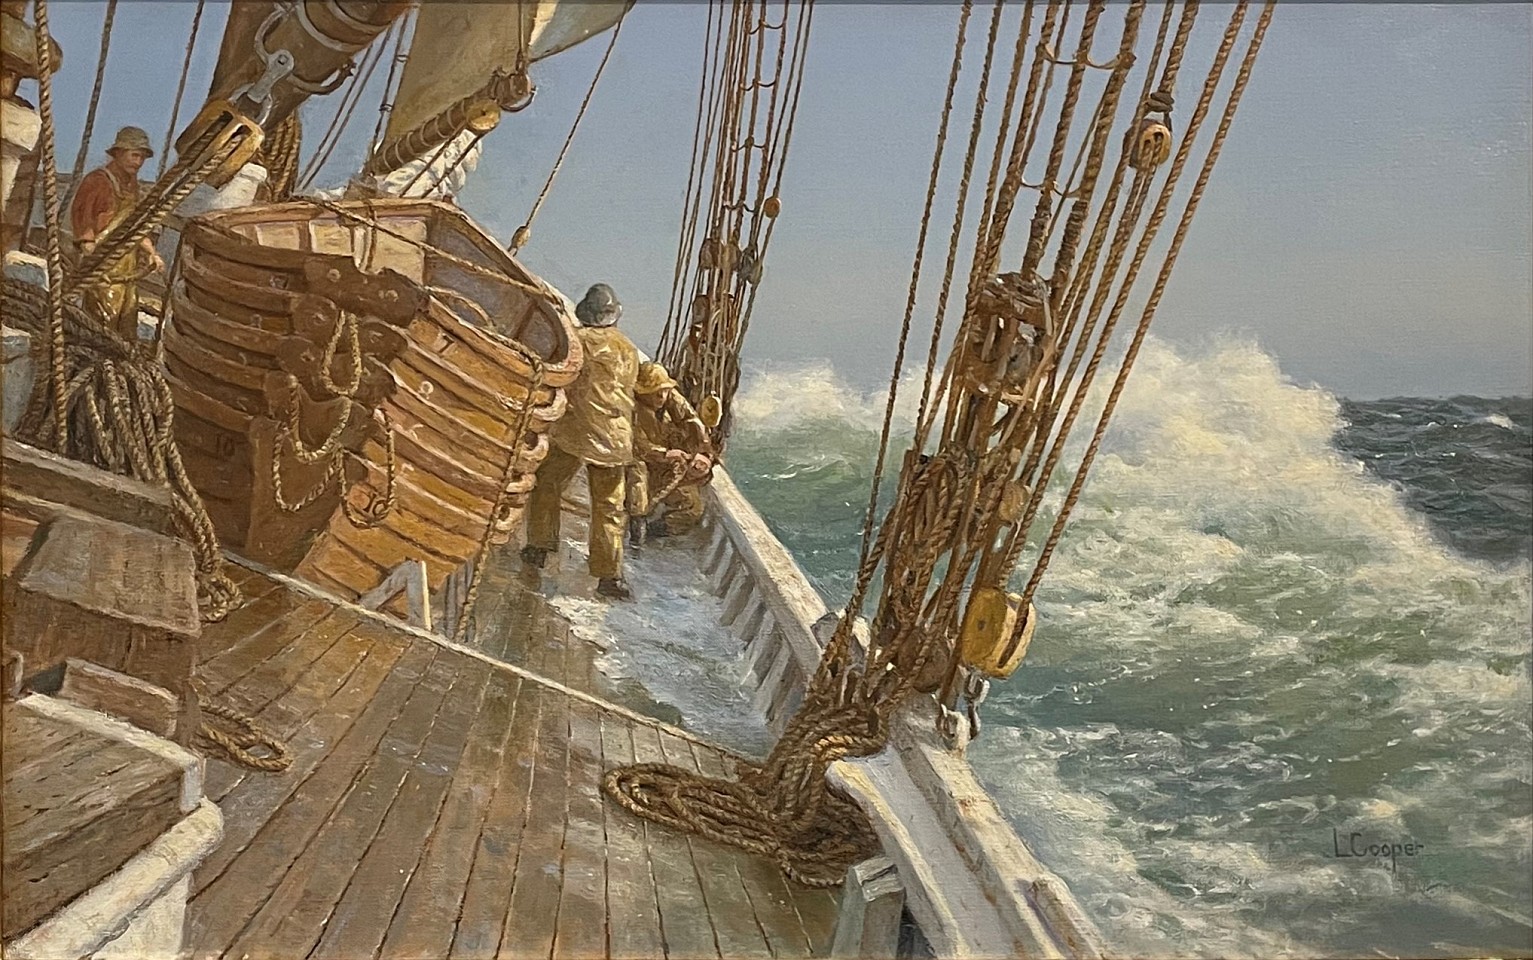 Laura Cooper, Bound for the Grand Banks, Gloucester Fishing Schooner, 1920
oil on linen, 17 x 27 in. (43.2 x 68.6 cm)
LC240402